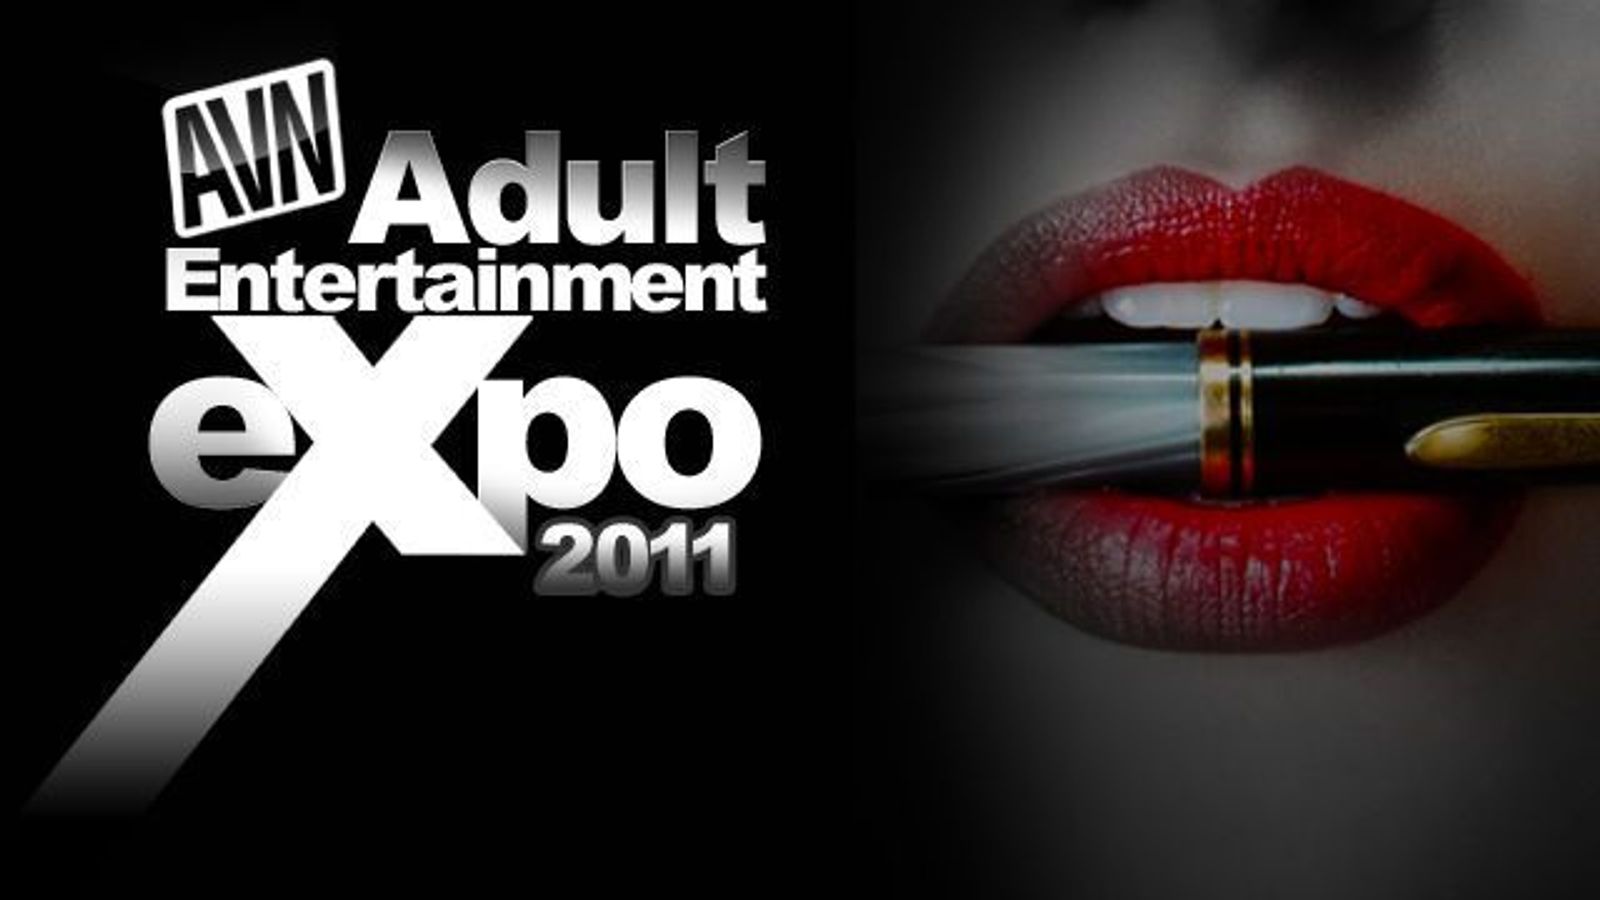 2011 Adult Entertainment Expo Kicks Open the Doors Thursday